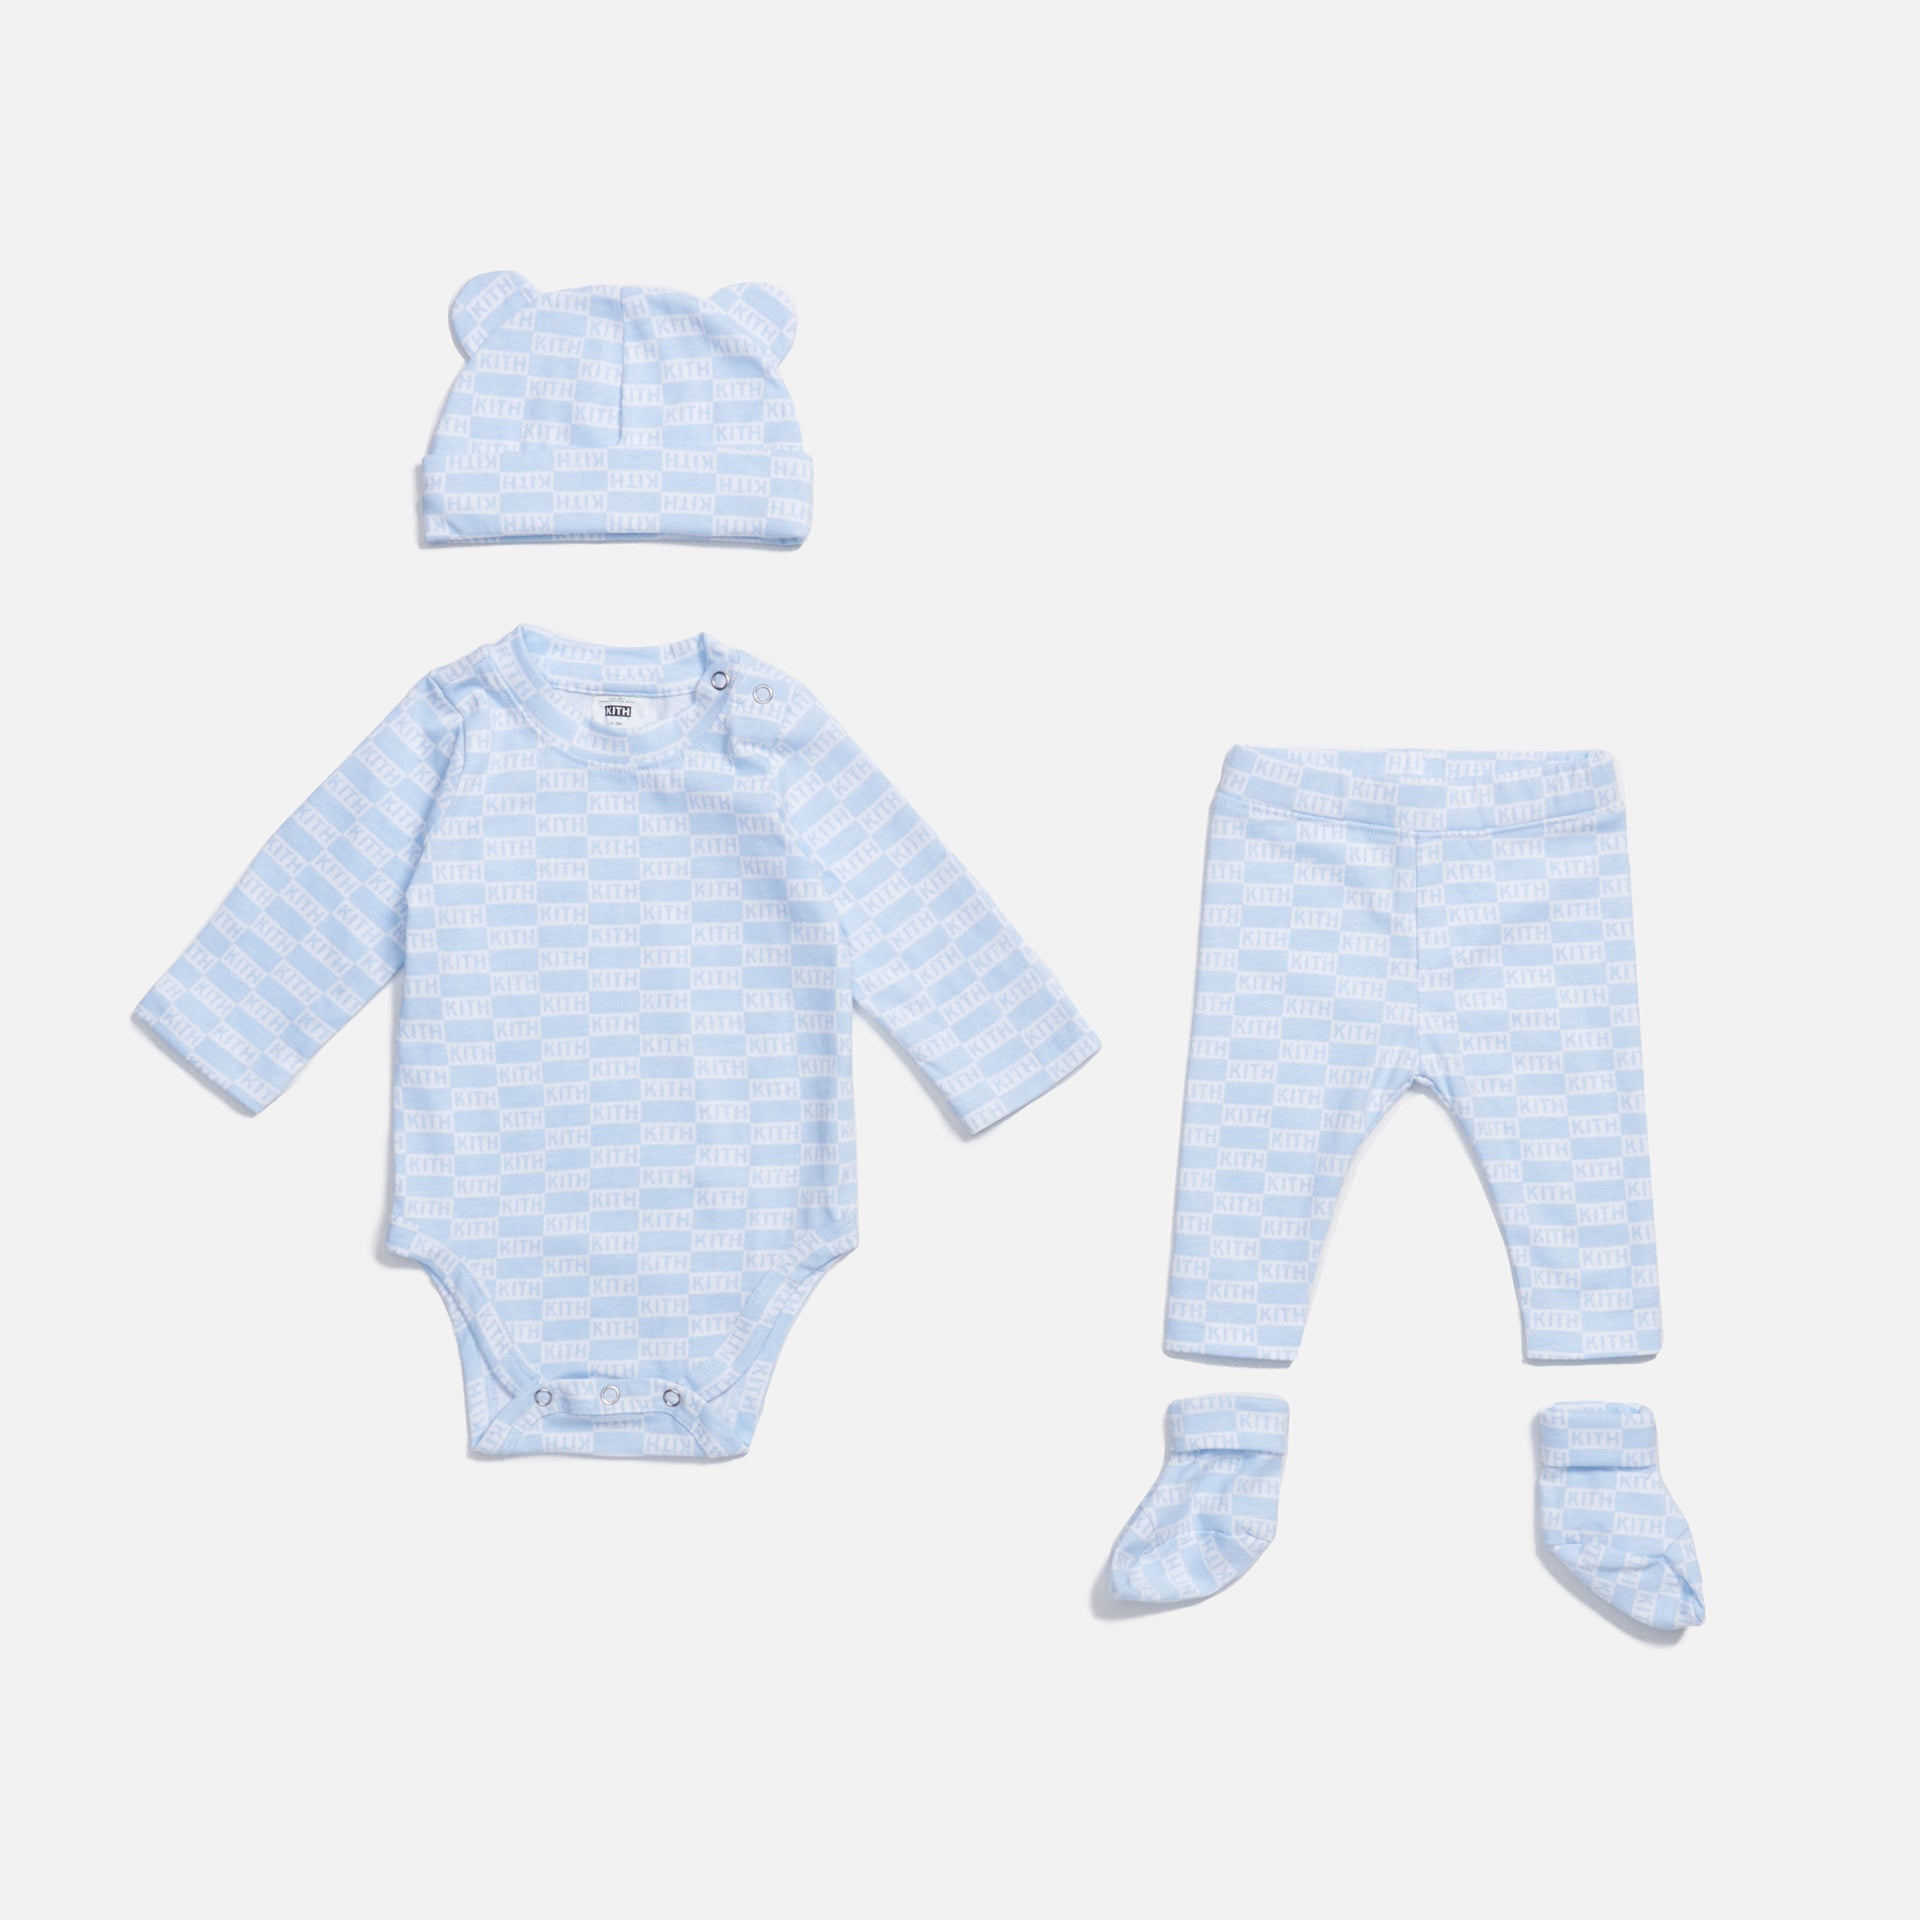 Kith Kids Baby Gift Set - Blue Multi